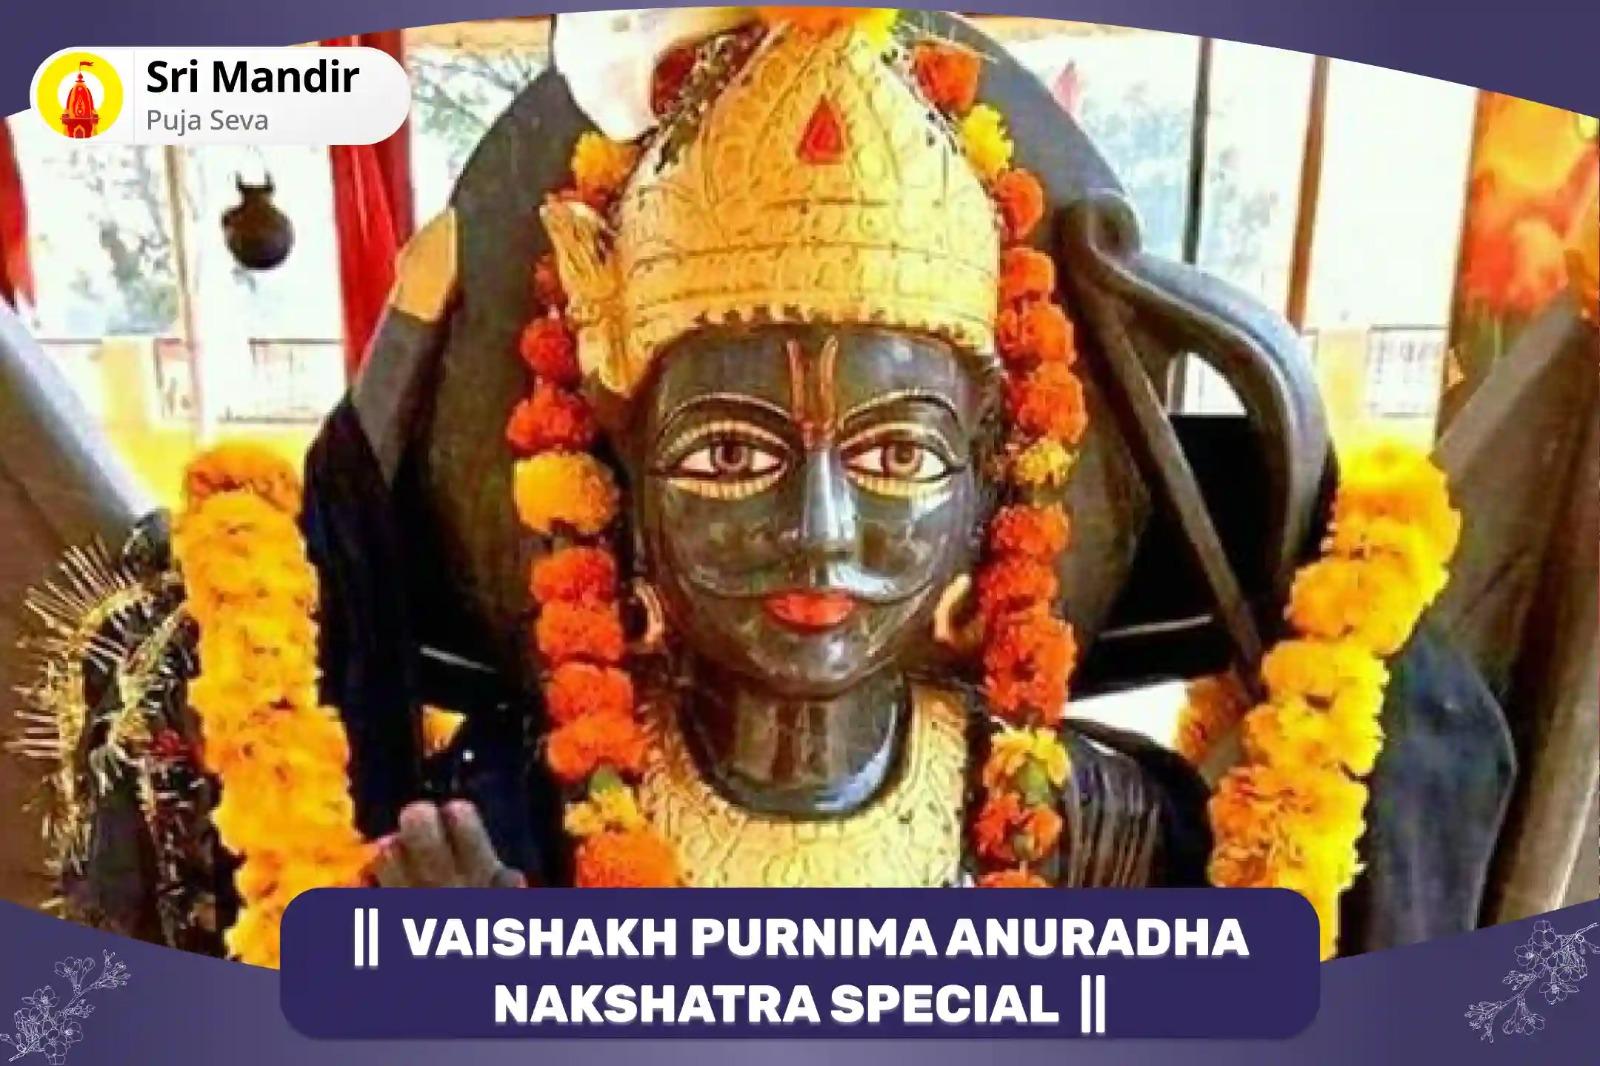 Vaishakh Purnima Anuradha Nakshatra Special Shani Saade Saati Peeda Shanti Mahapuja and Til Tel Abhishek for Prevention of Misfortunes and Adversities